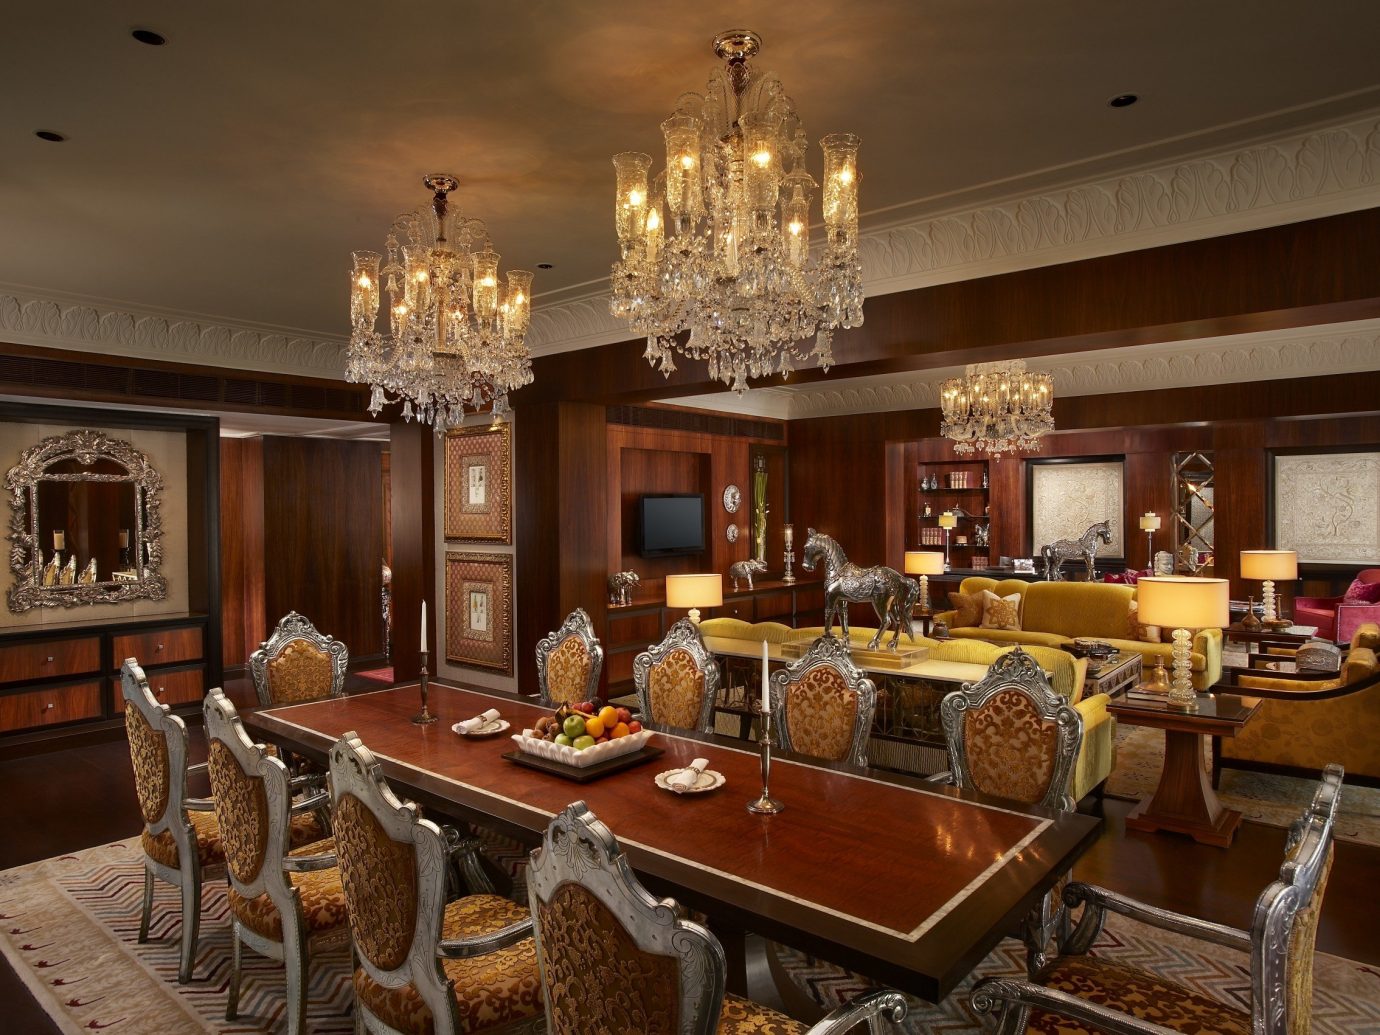 Hotels Luxury Travel indoor dining room room ceiling interior design counter living room restaurant Bar table estate